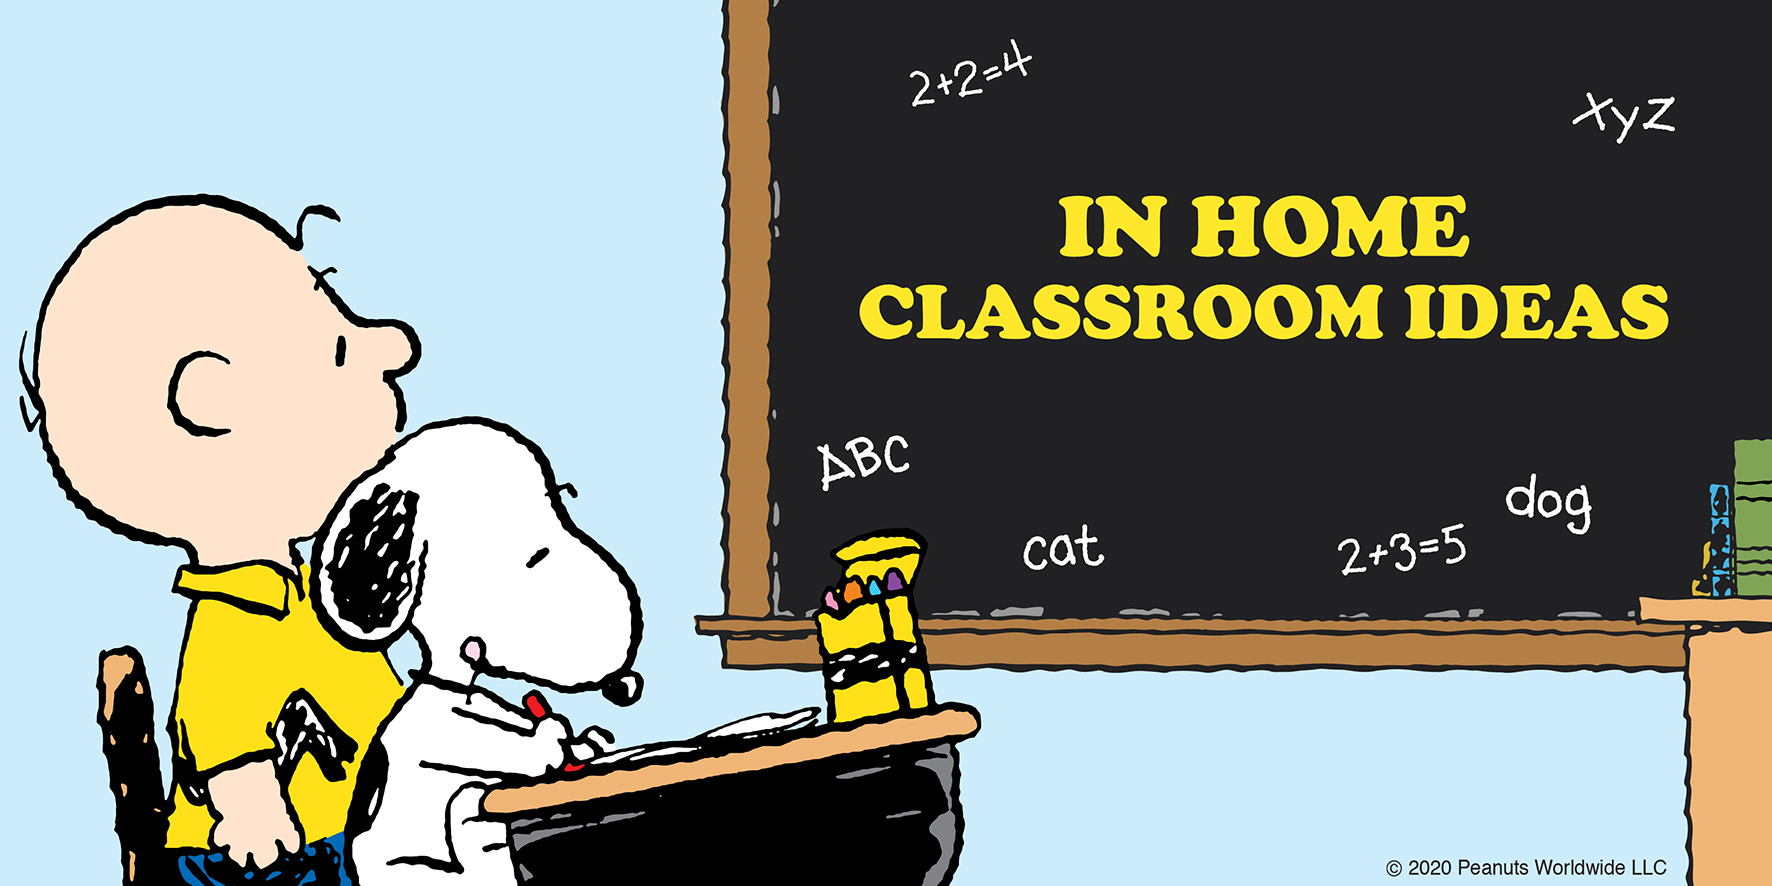 Snoopyの無料オンライン教材を提供 Peanuts Worldwide 日本語による4歳 13歳の生徒向け 子供も保護者も自宅学習を楽しく 株式会社ソニー クリエイティブプロダクツのプレスリリース